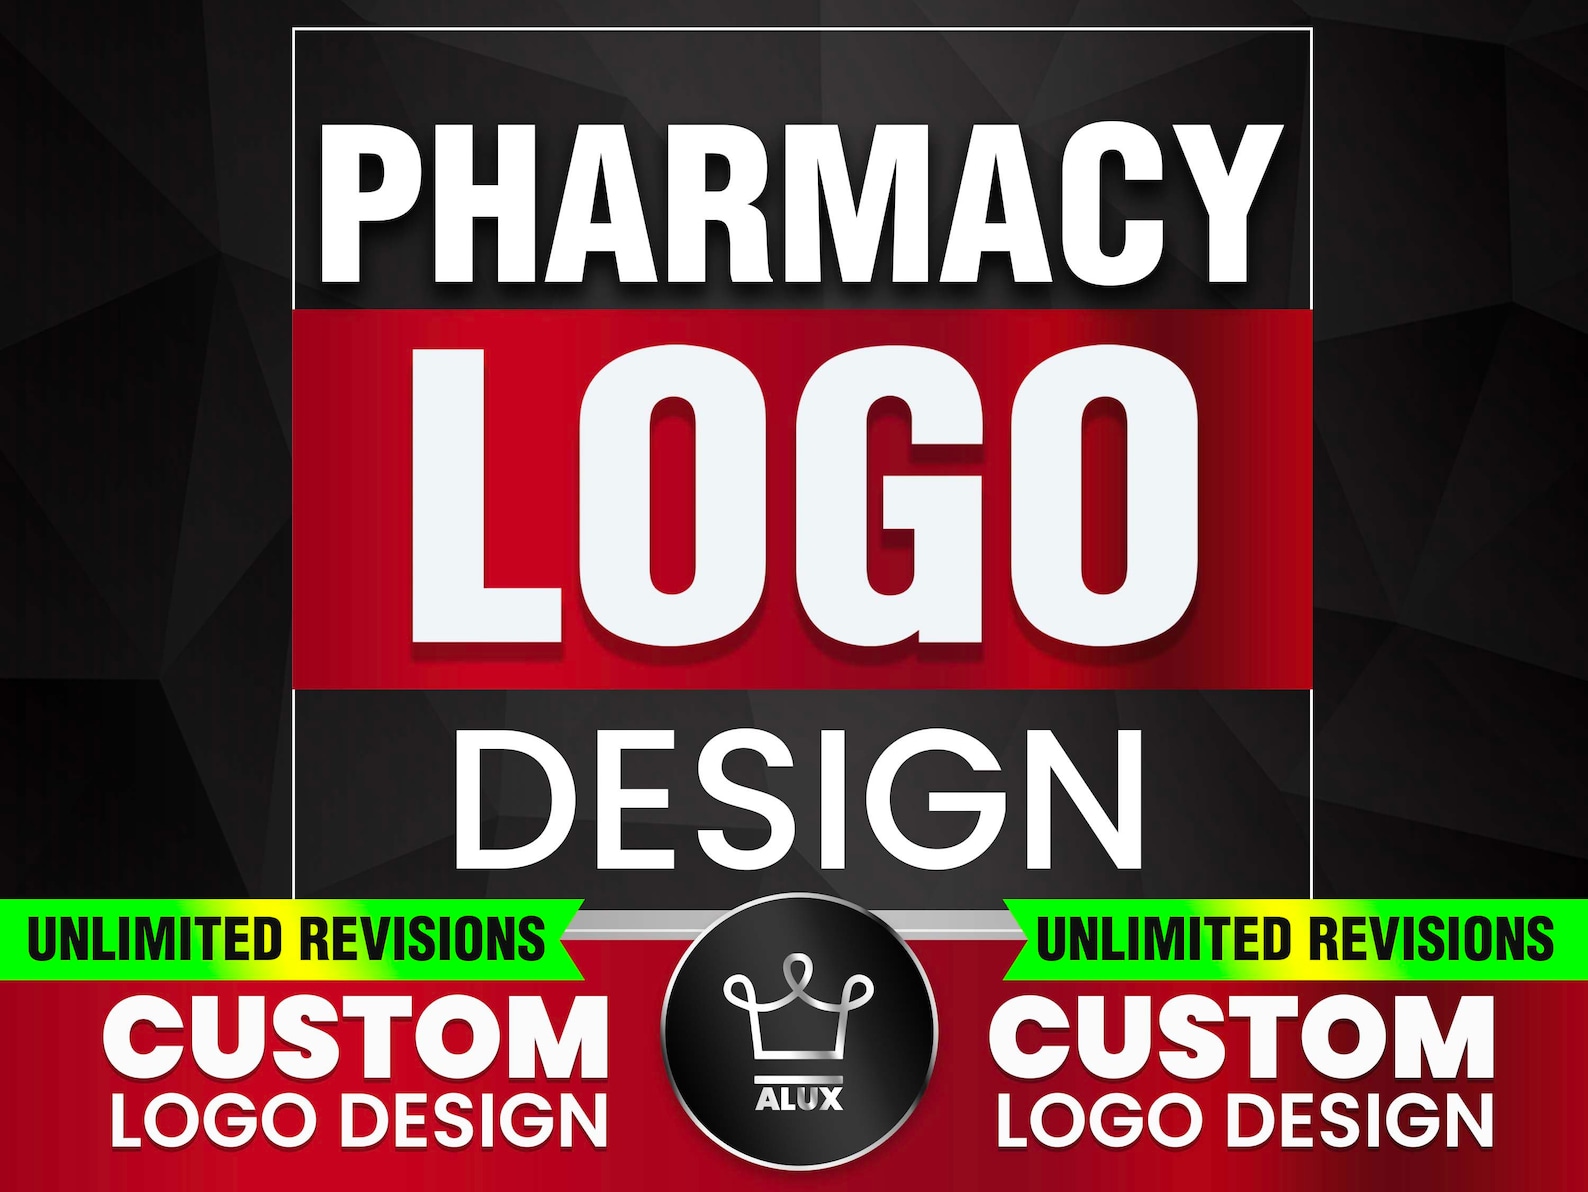 PHARMACY LOGO Design Custom Pharmacy Logo Design Service. I | Etsy